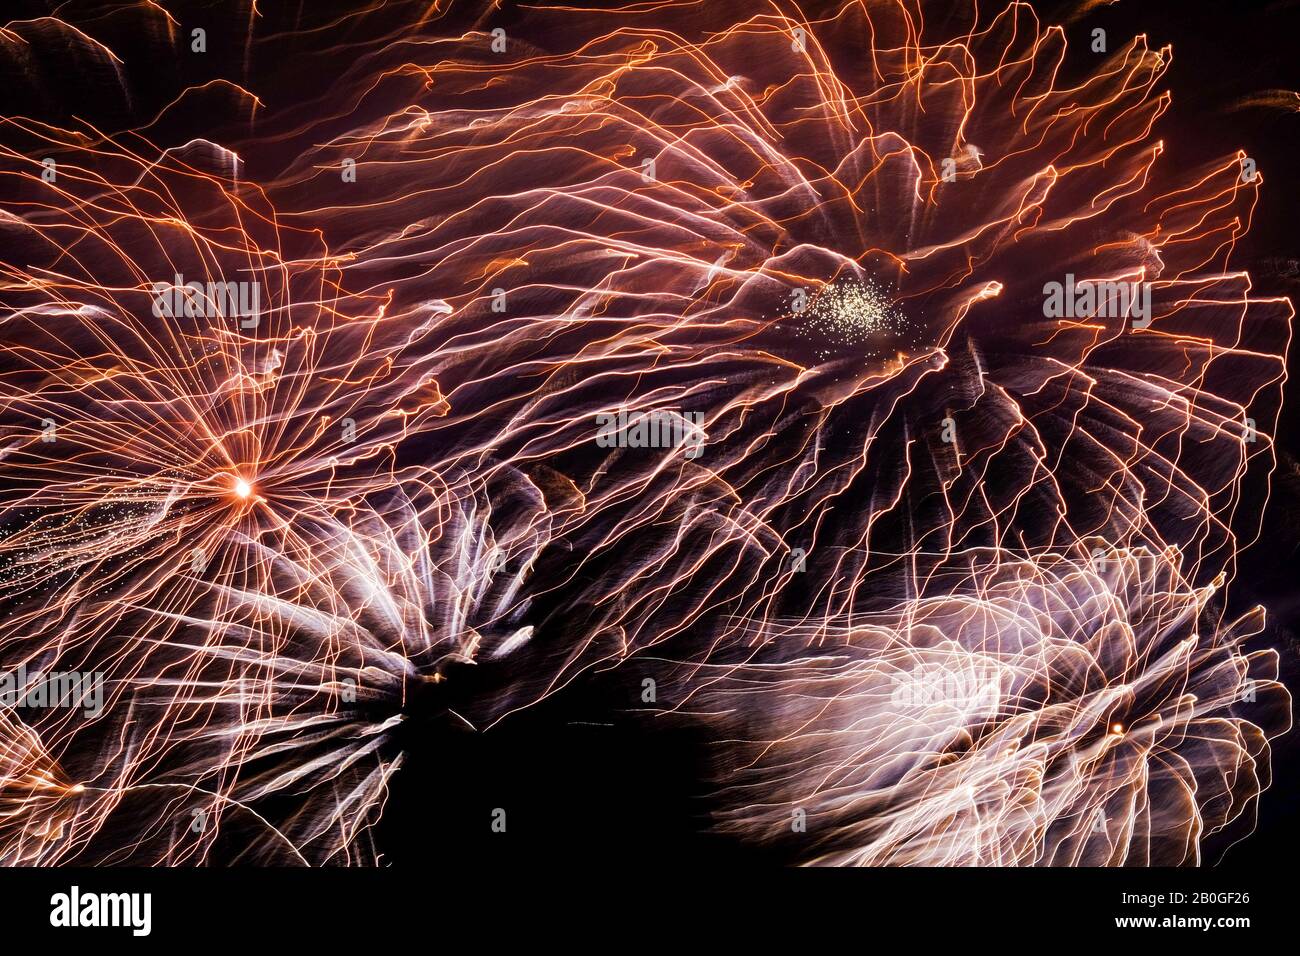 Fireworks-Blurred Motion. RZXT1935 Stock Photo